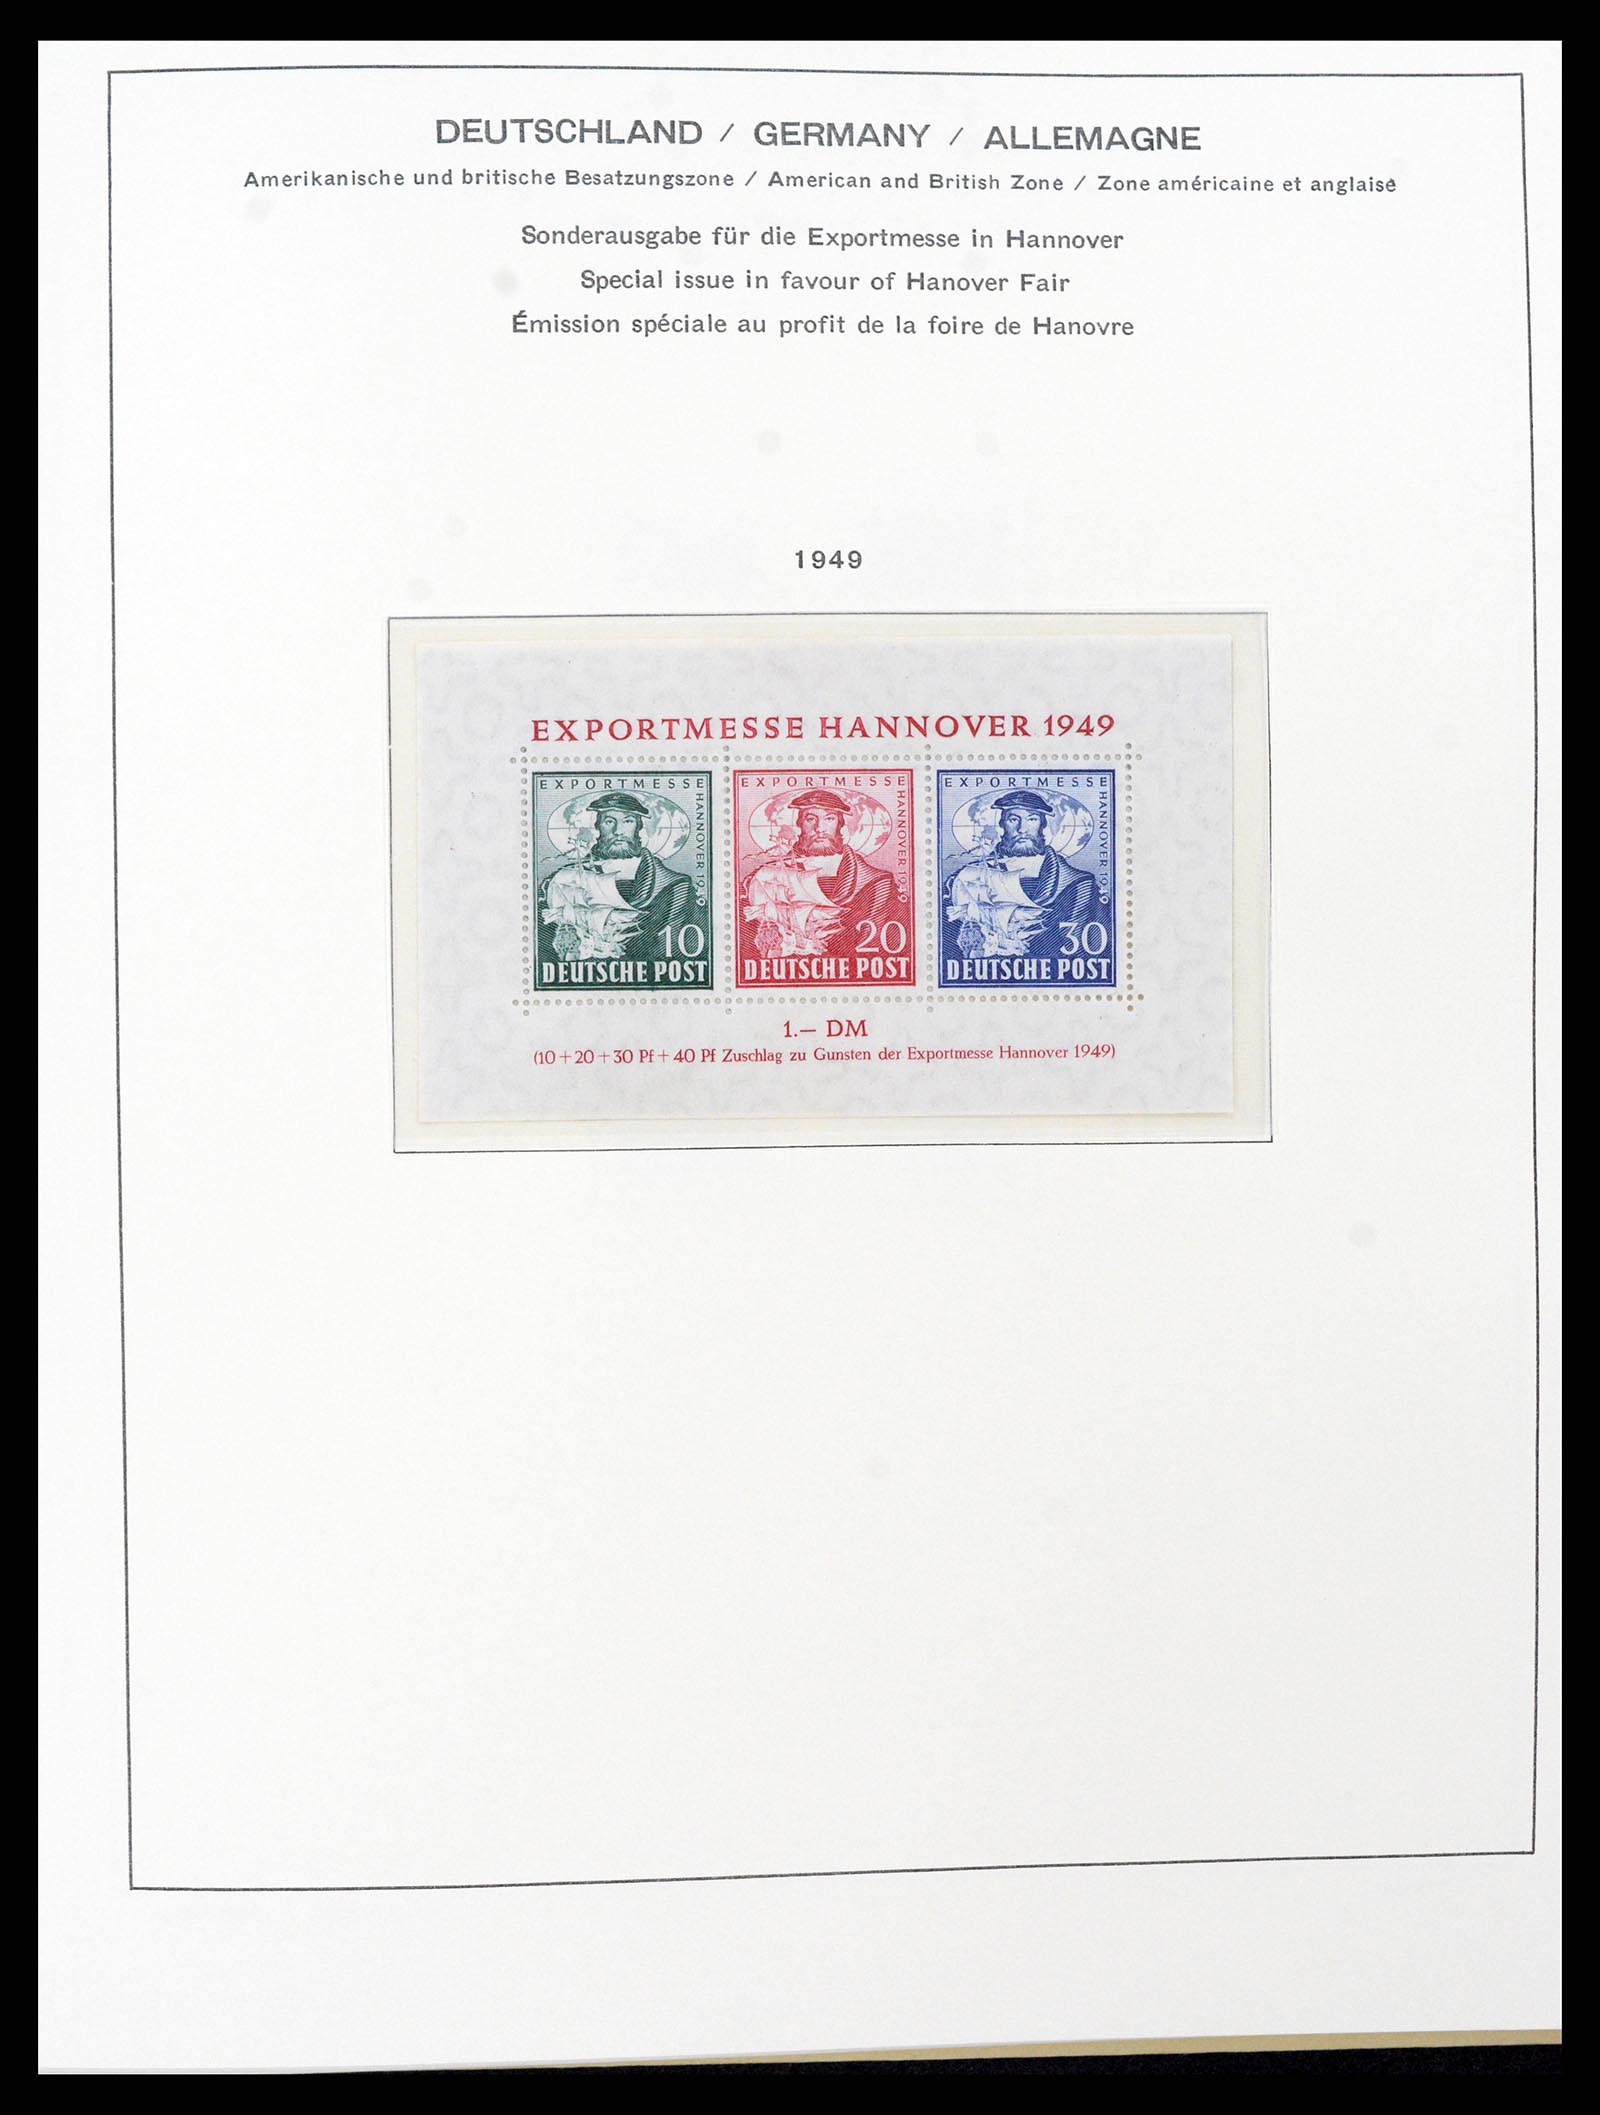 37645 017 - Stamp collection 37645 German Zones 1945-1949.